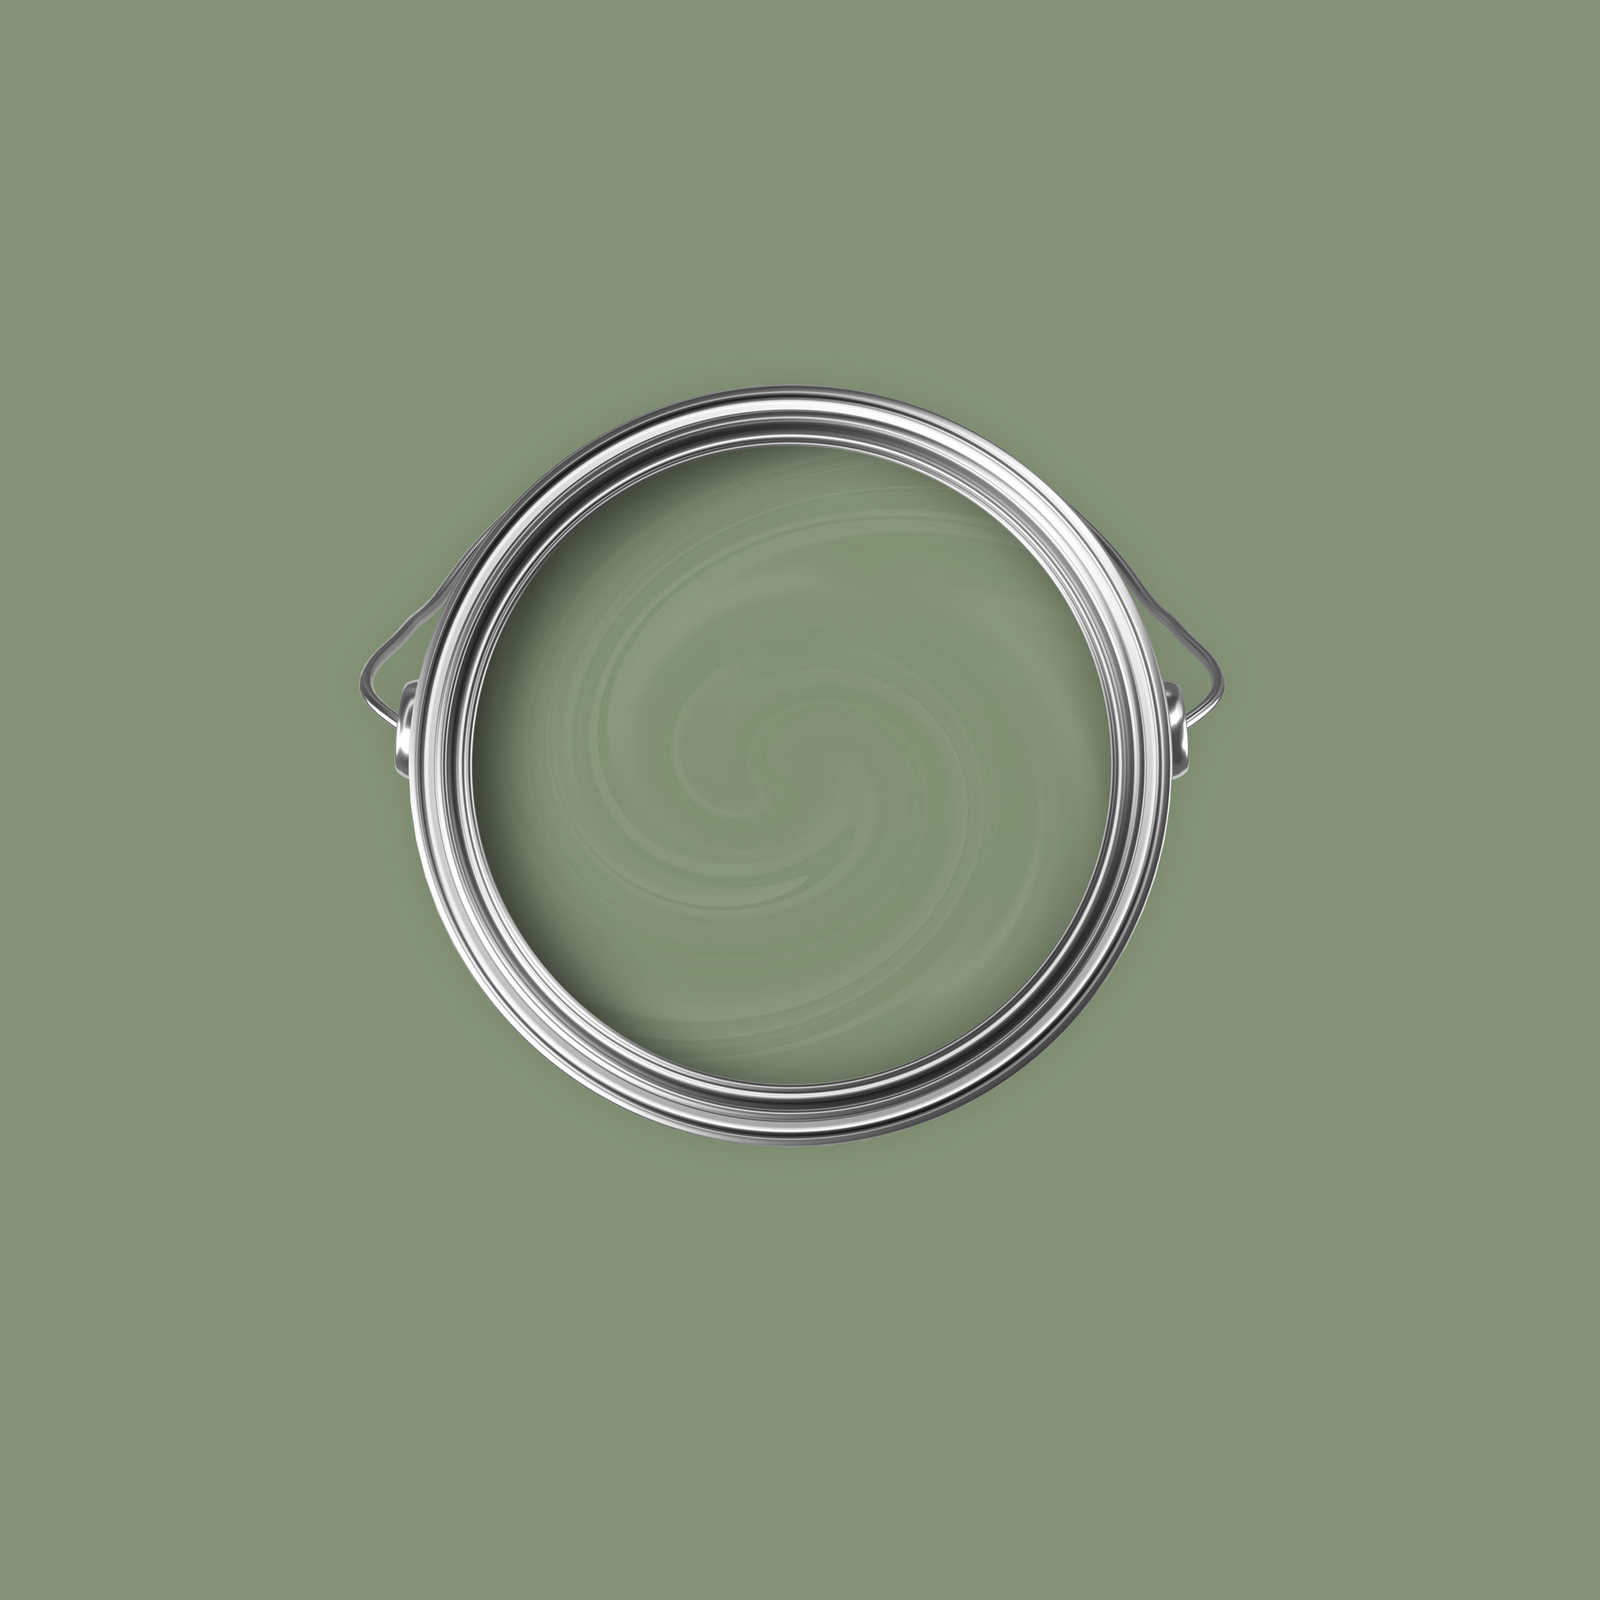             Pittura murale Premium Verde oliva naturale »Gorgeous Green« NW503 – 2,5 litri
        